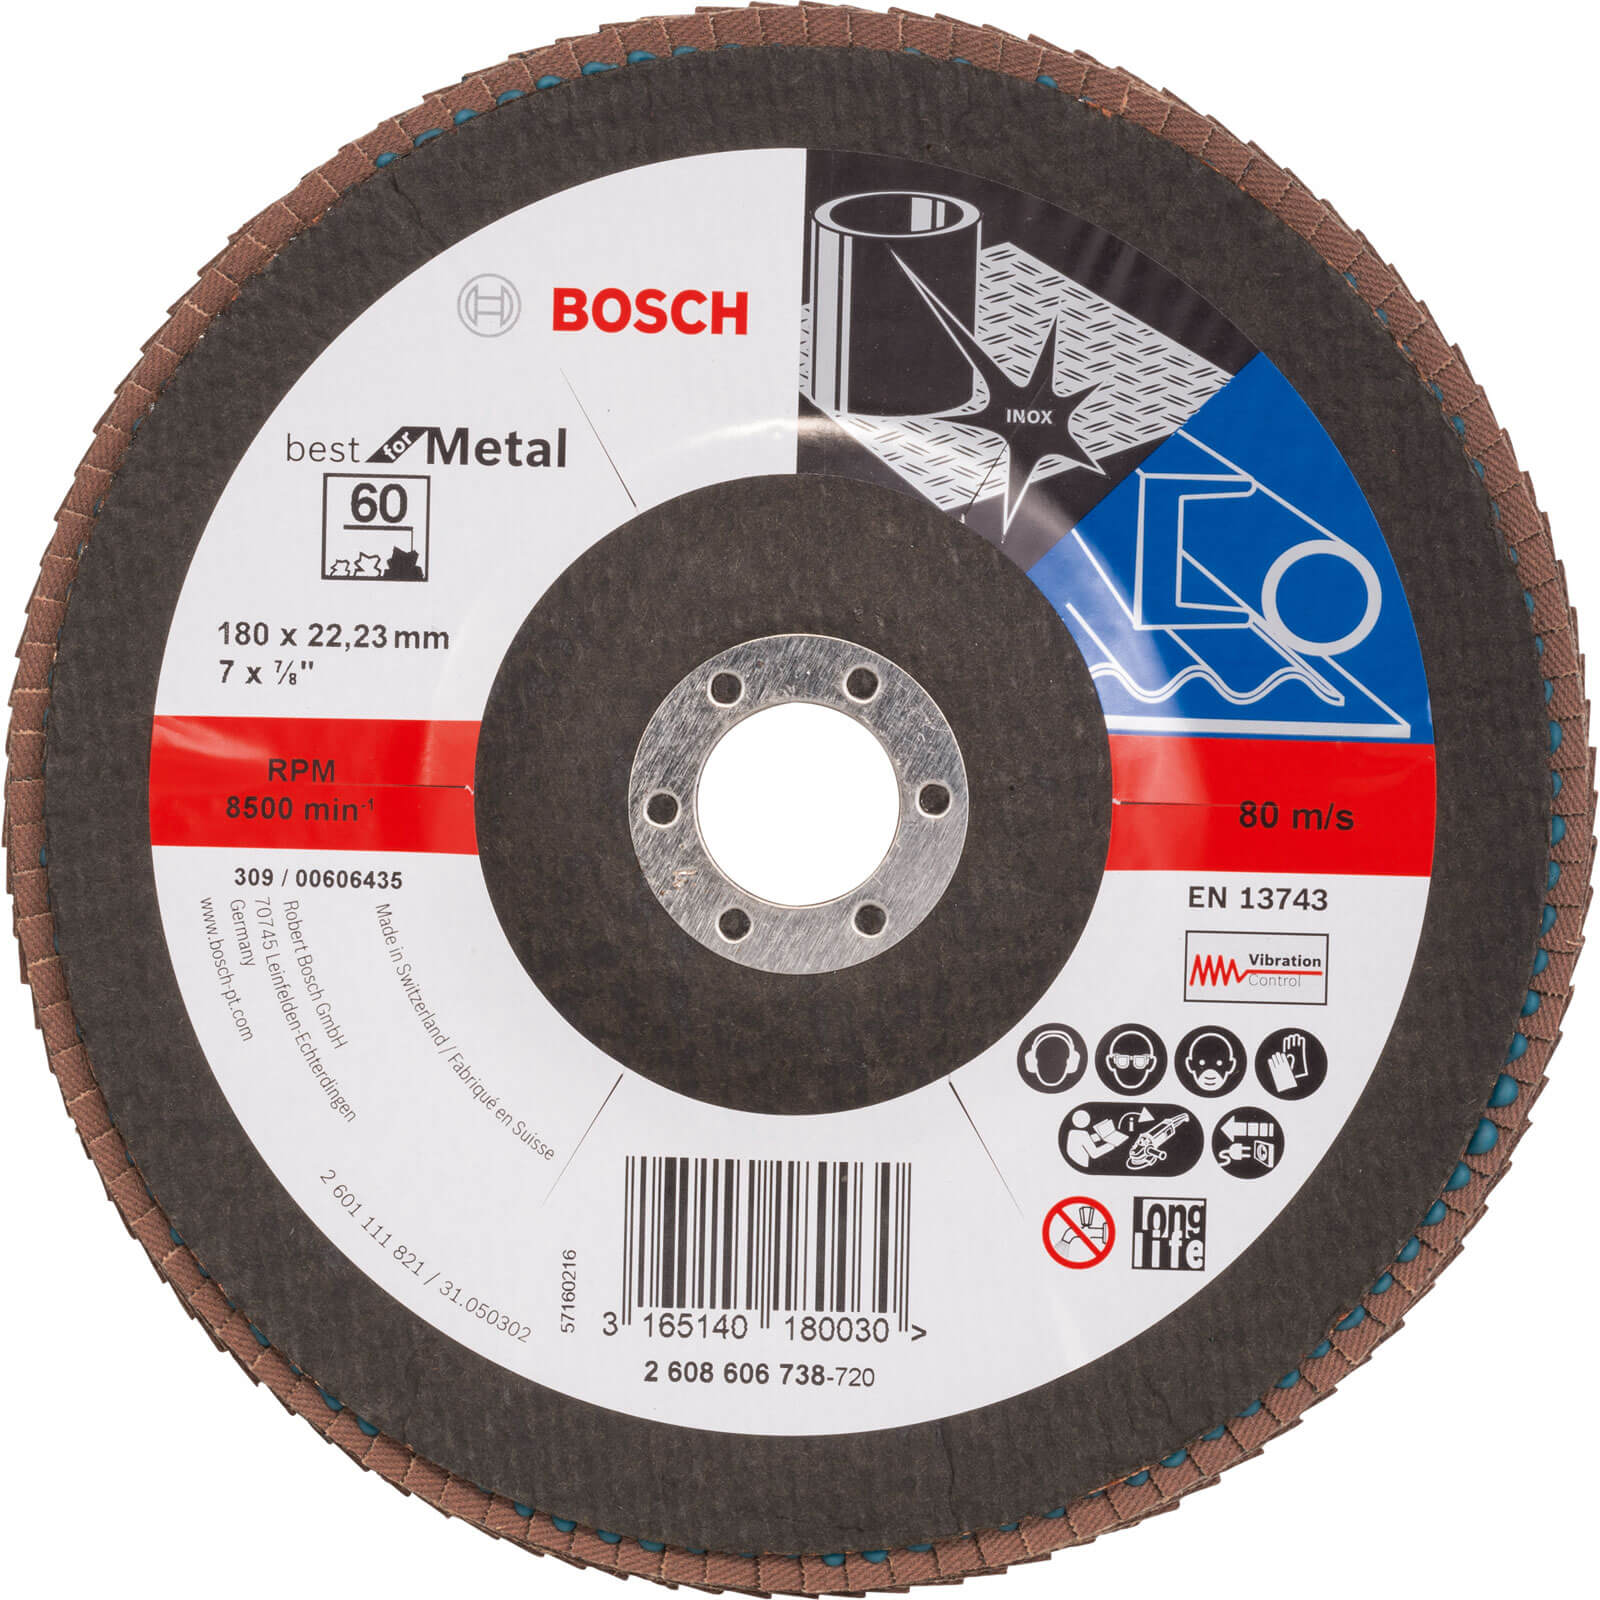 Image of Bosch Zirconium Abrasive Flap Disc 180mm 60g